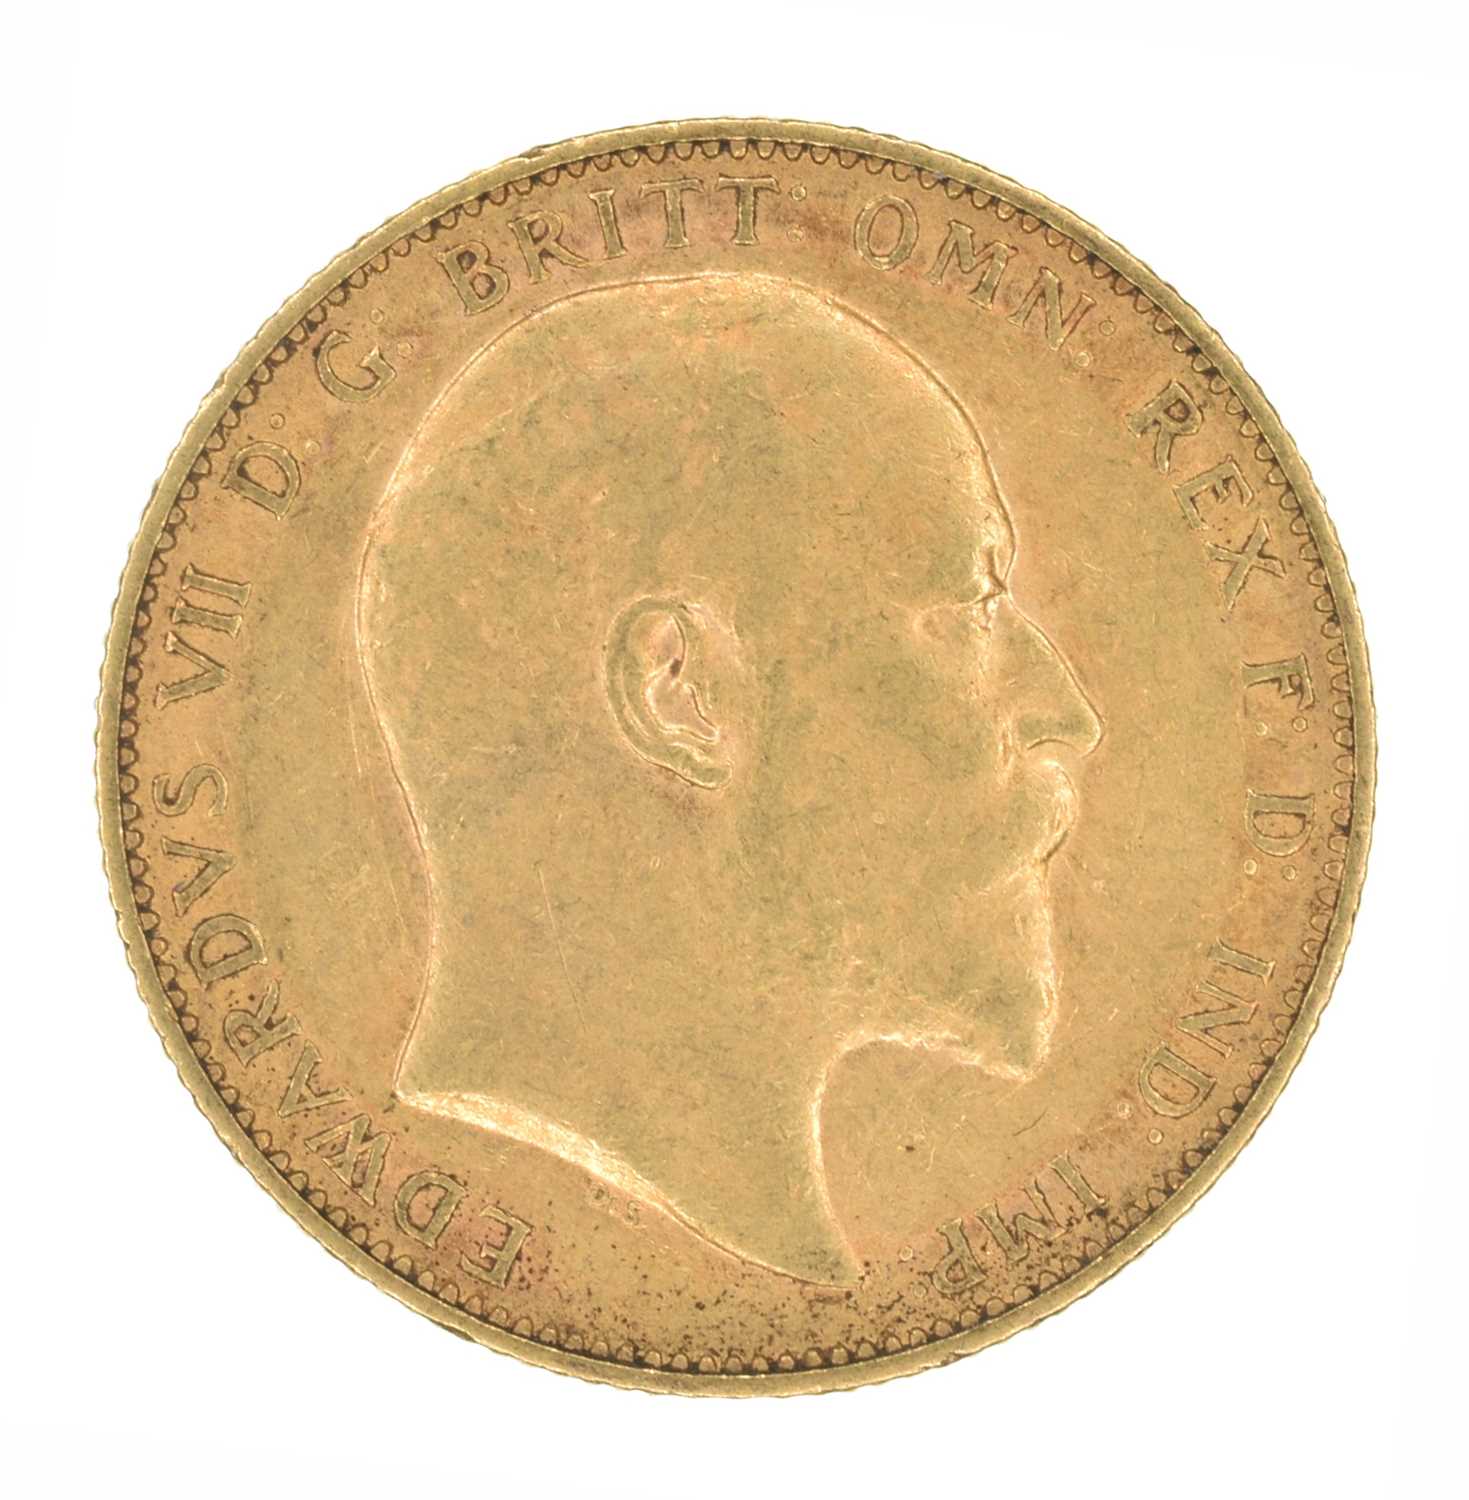 Lot 191 - King Edward VII, Sovereign, 1905, Perth Mint.